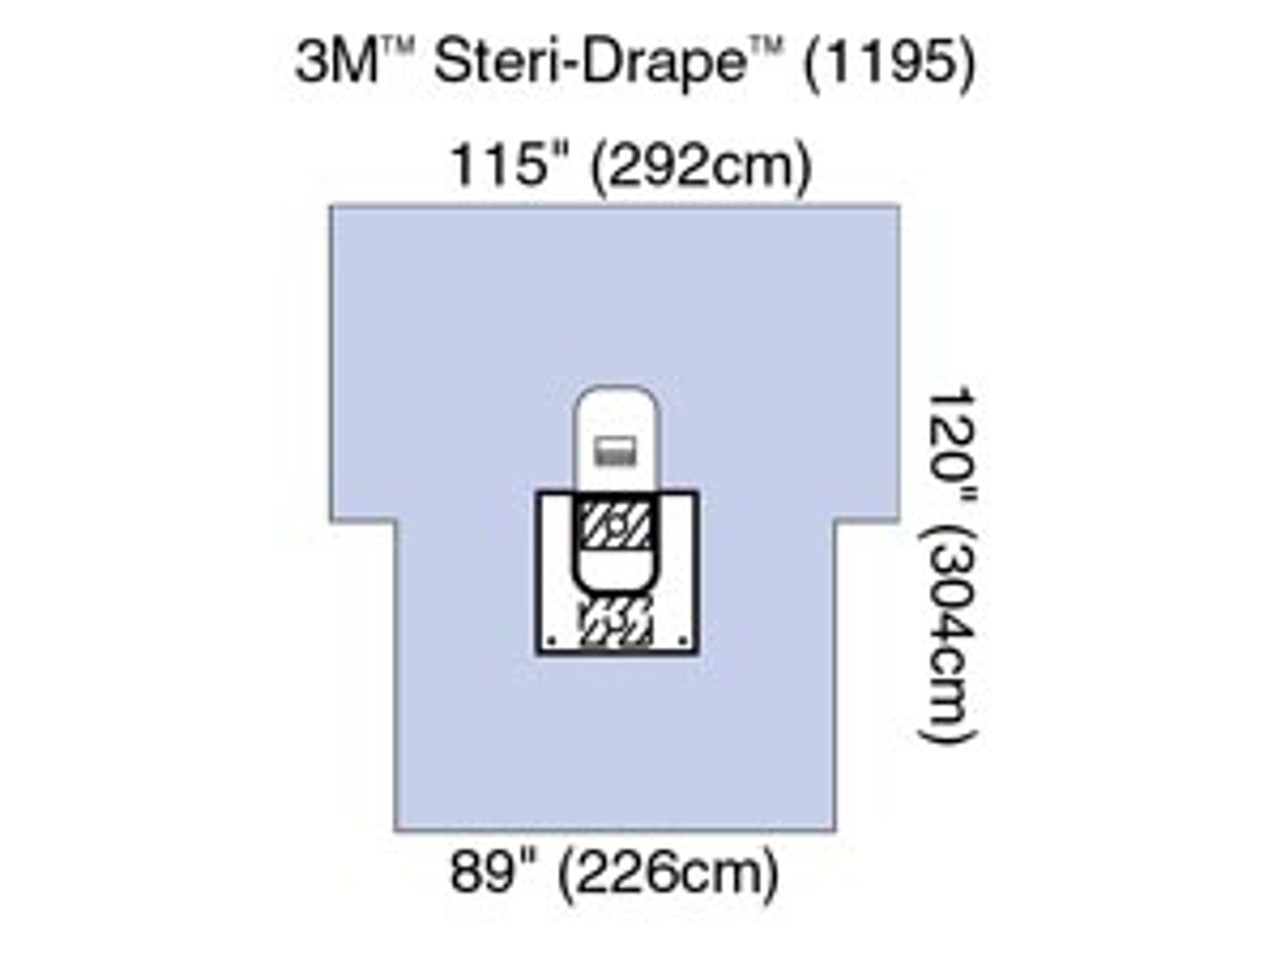 3M STERI-DRAPE ARTHROSCOPY DRAPES, 1195